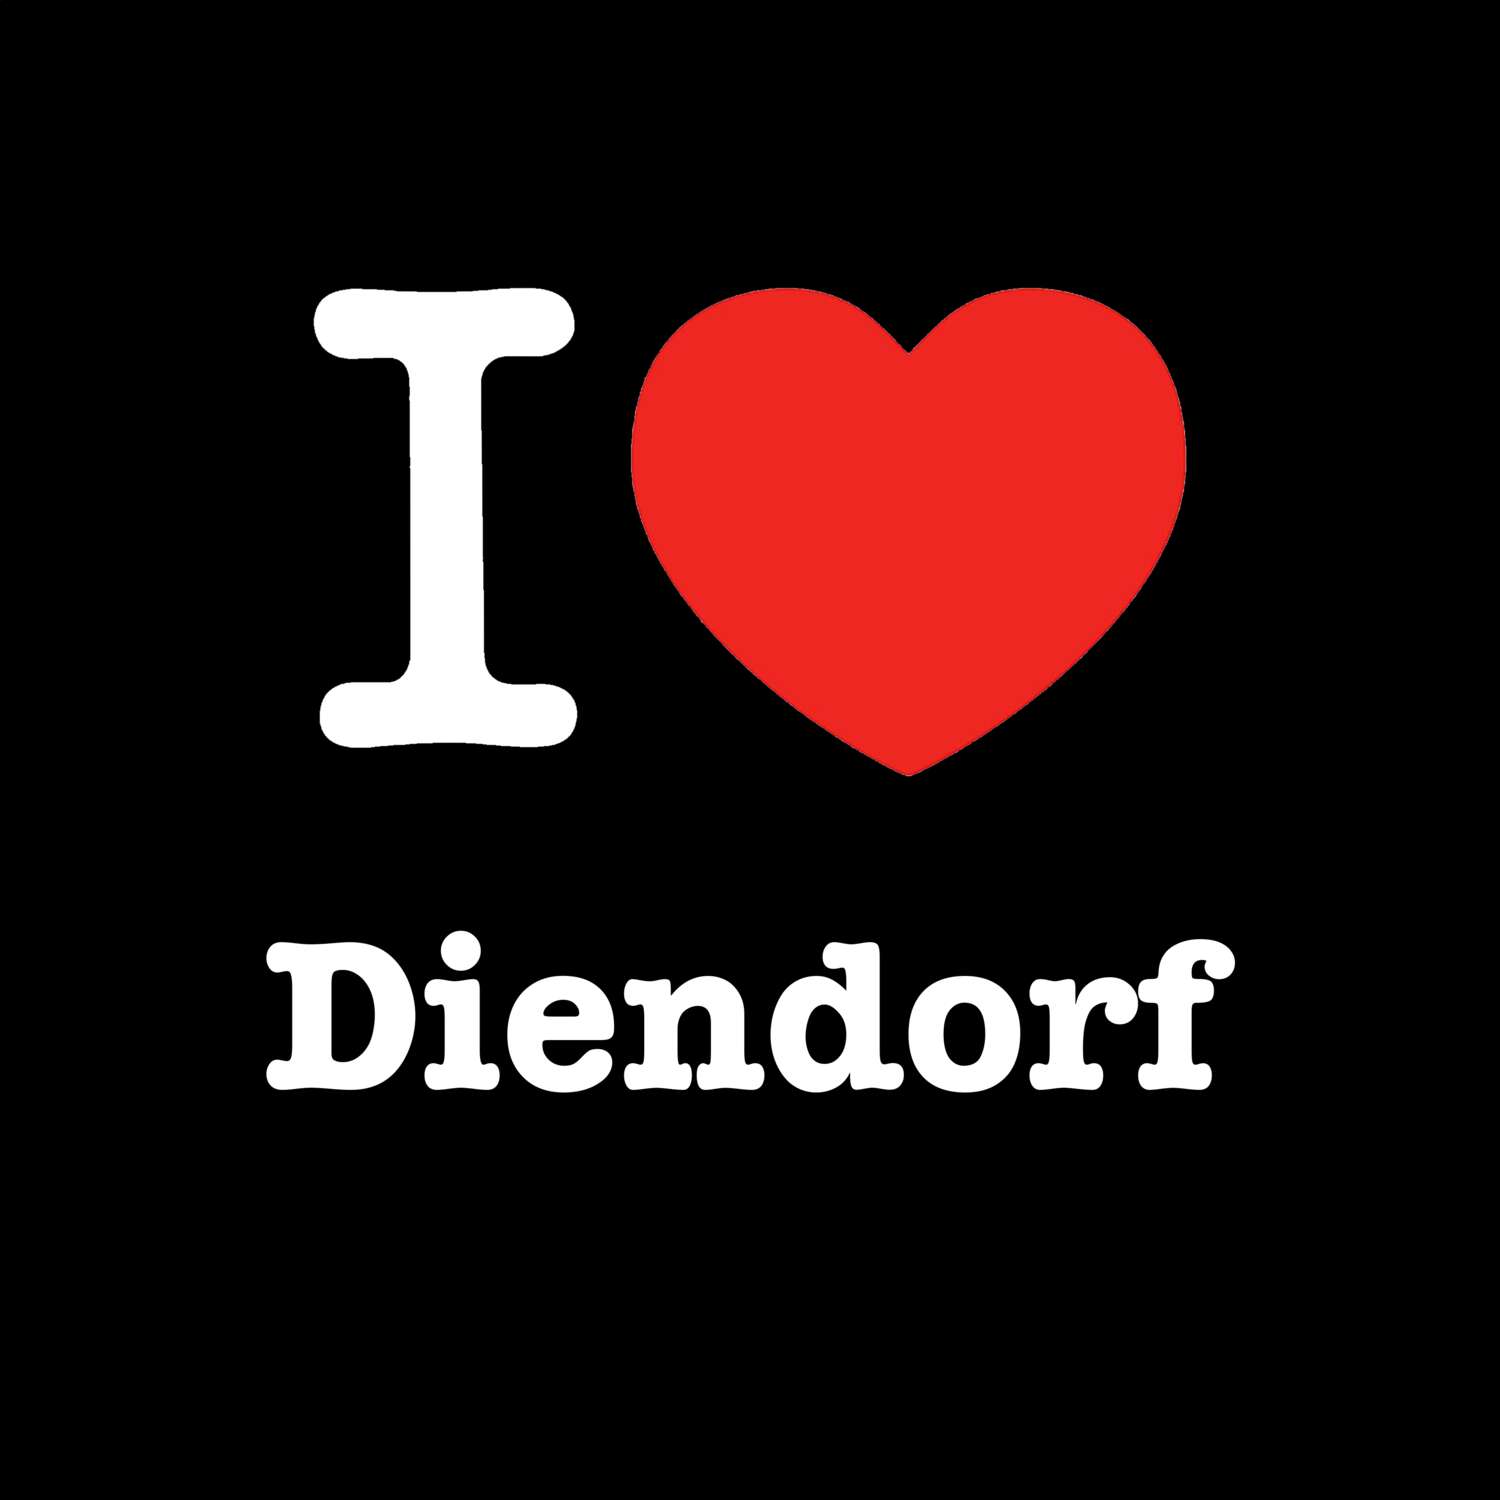 Diendorf T-Shirt »I love«